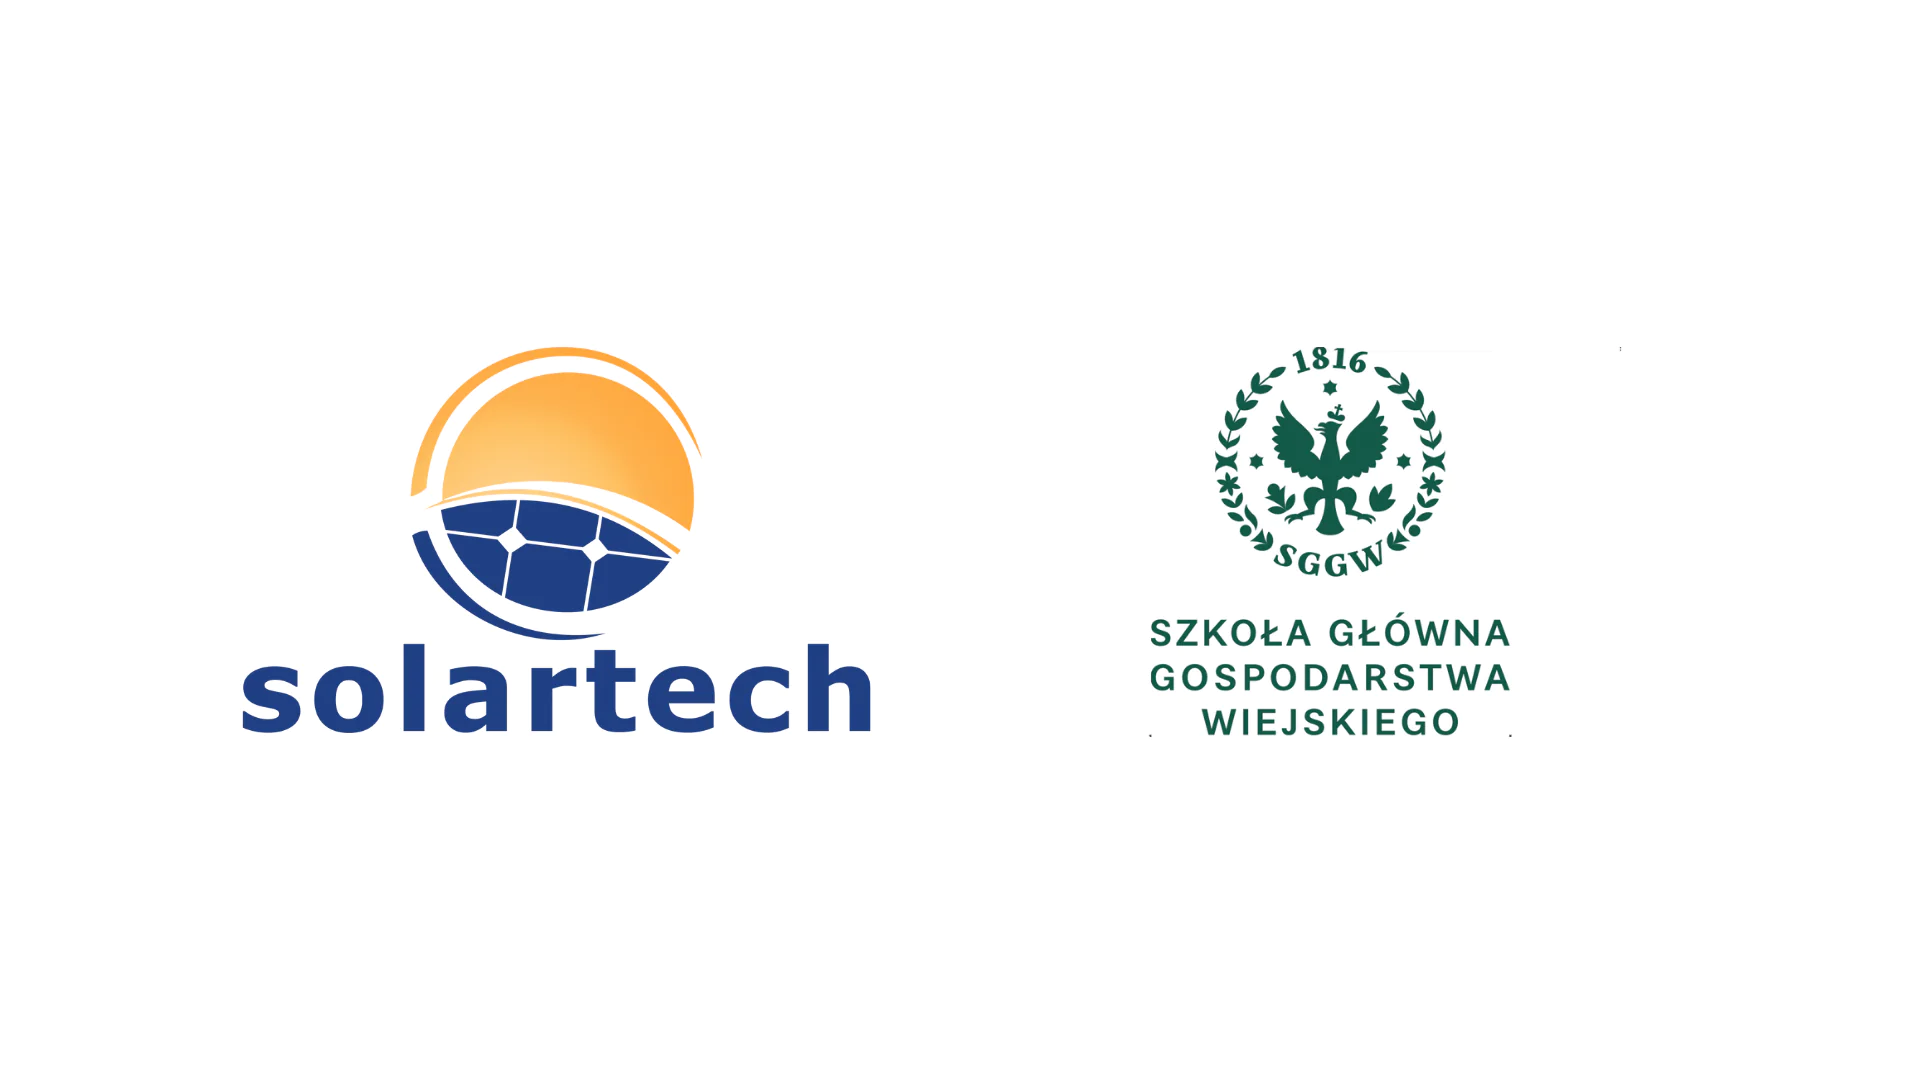 Logotypy Solartech i SGGW